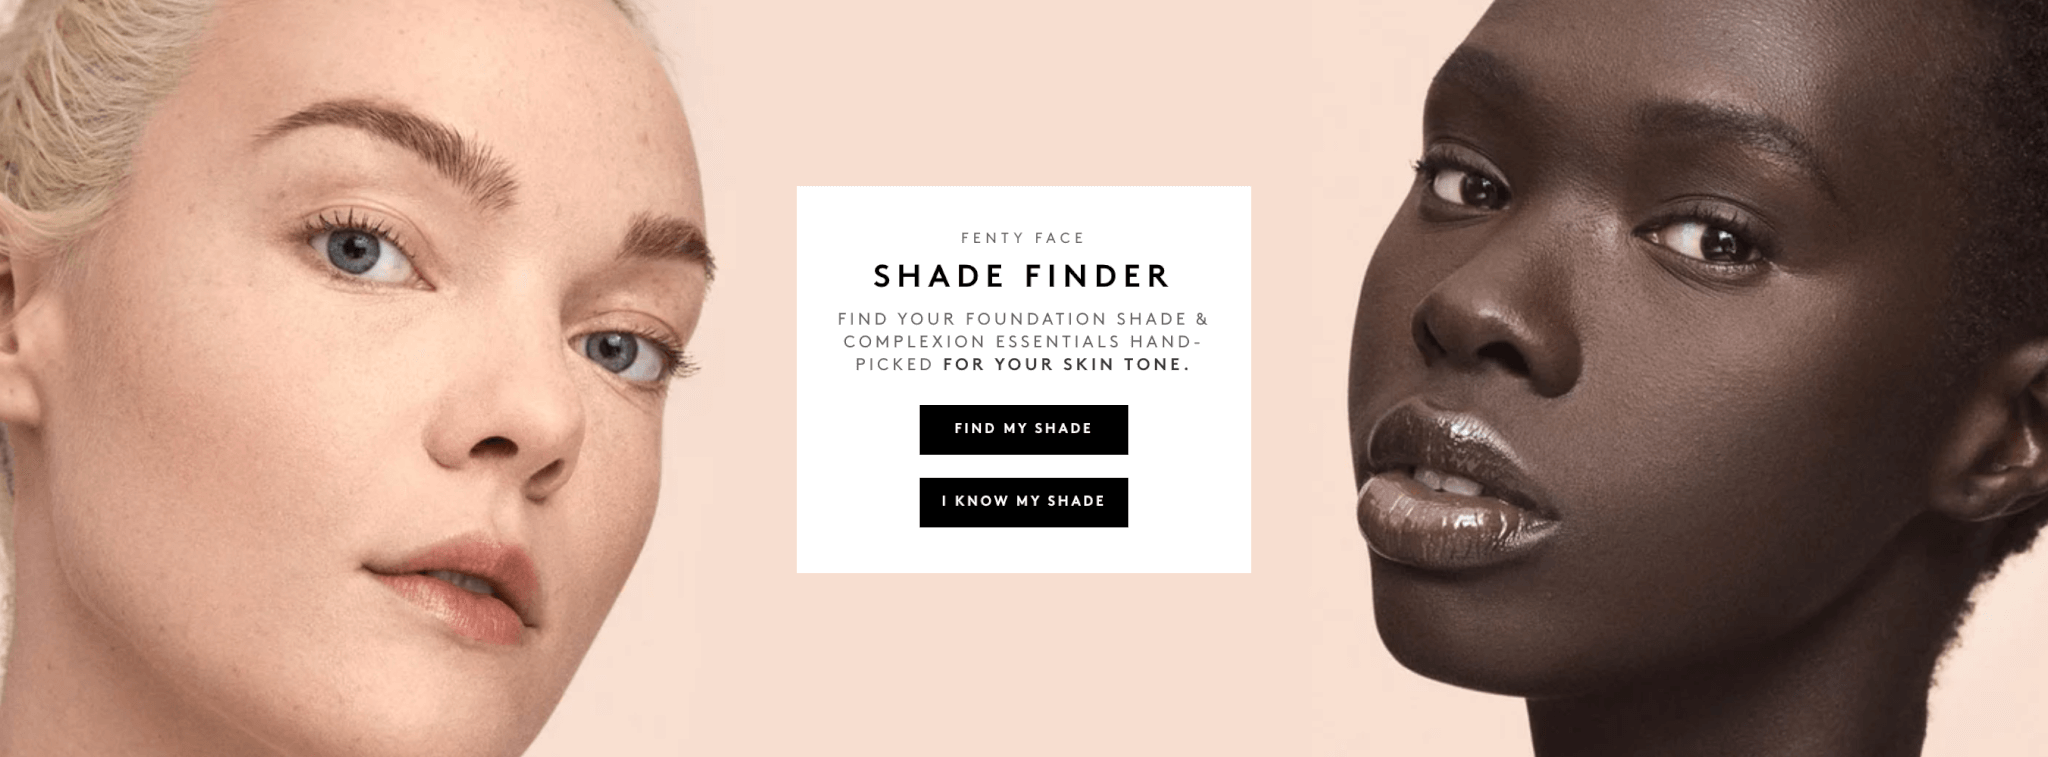 FENTY Face Shade Finder